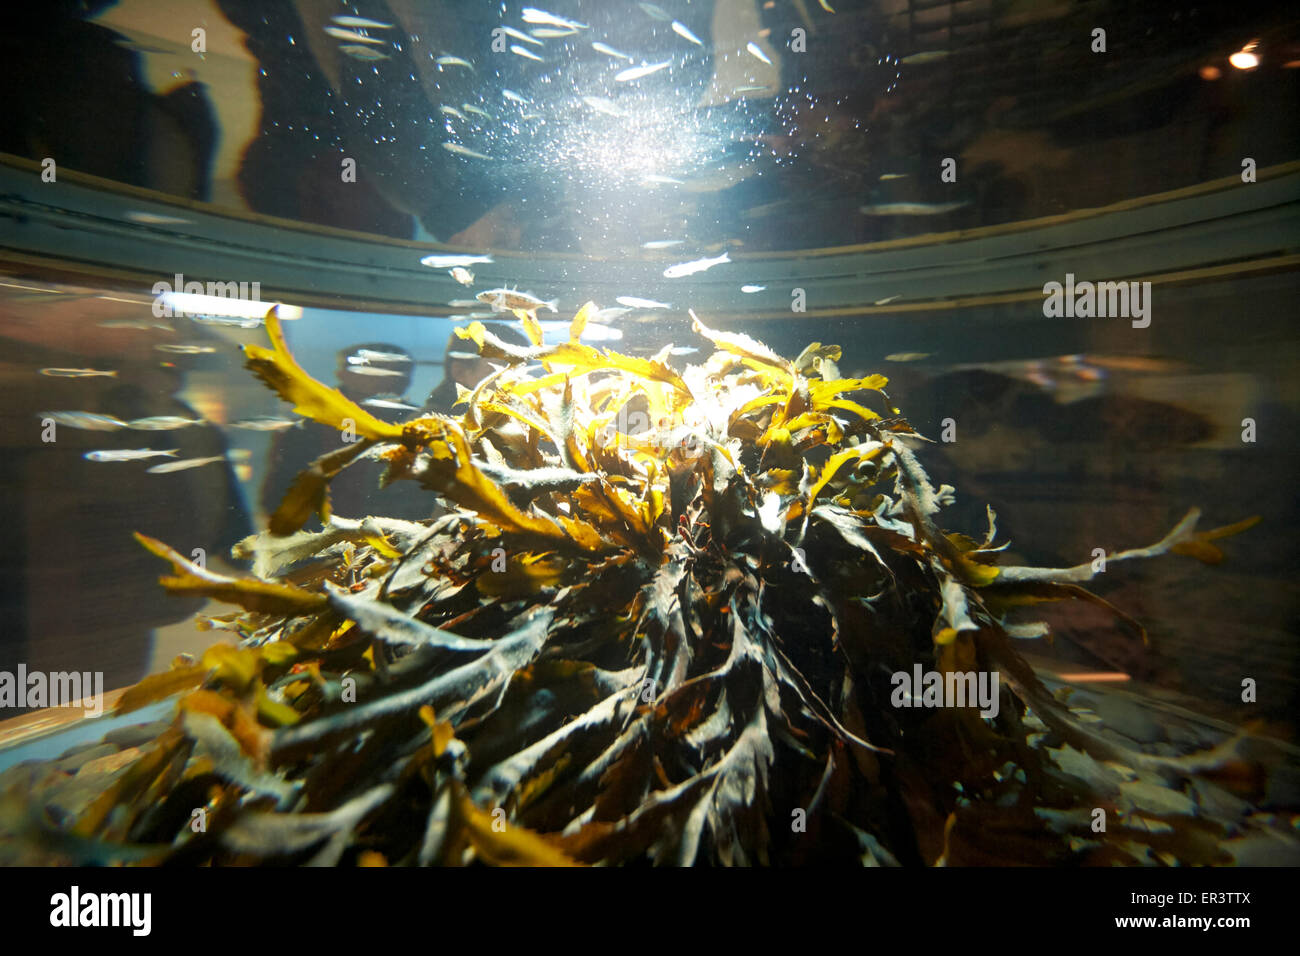 fish and seaweed in a saltwater public aquarium Stock Photo